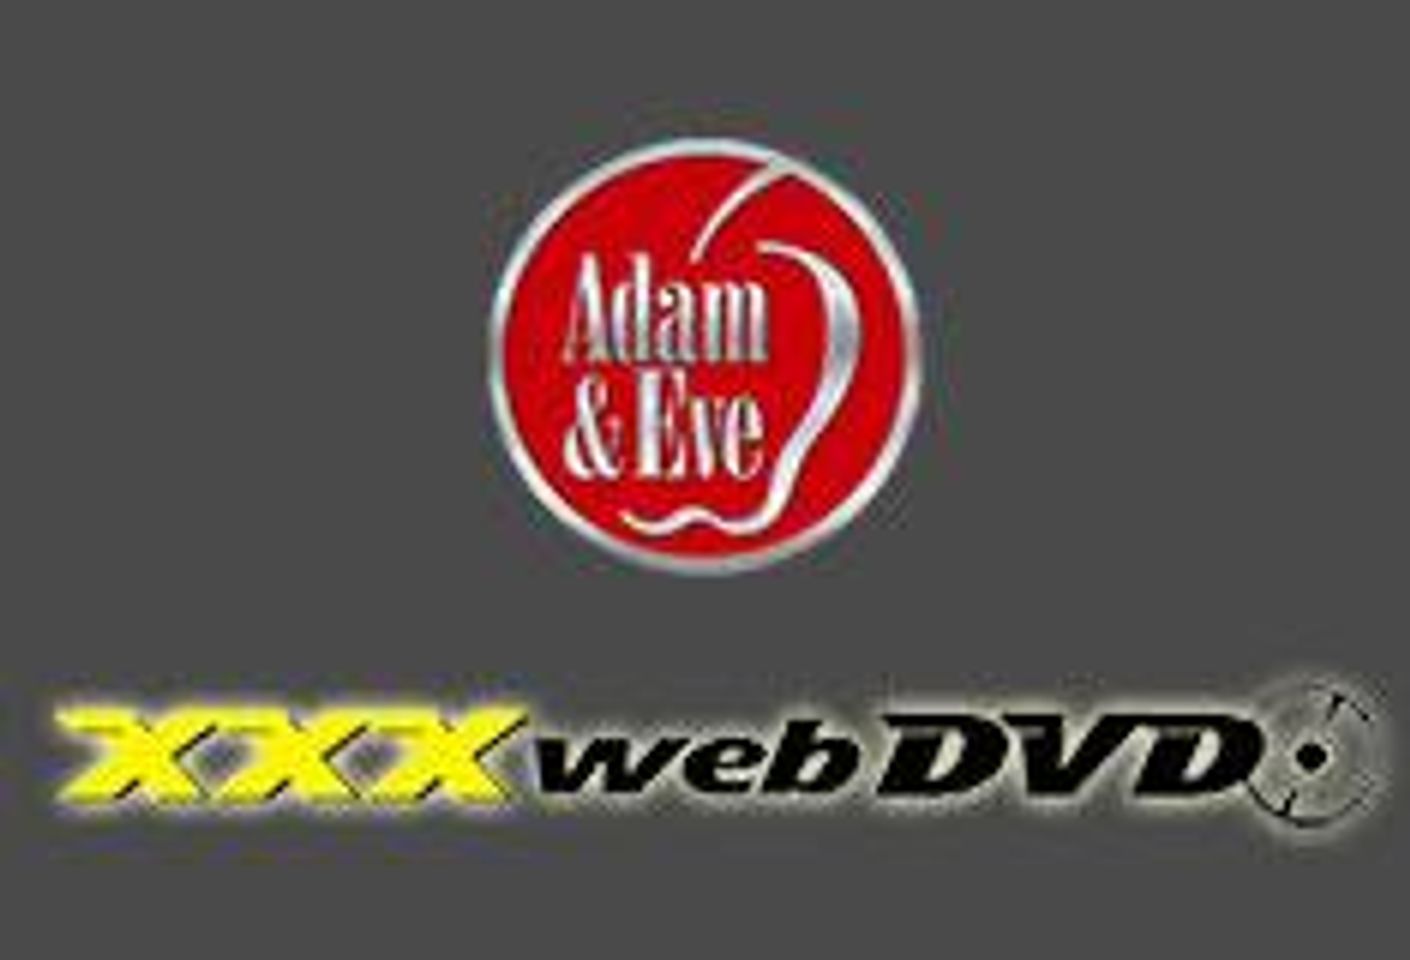 Adam & Eve Launches Web DVD Line